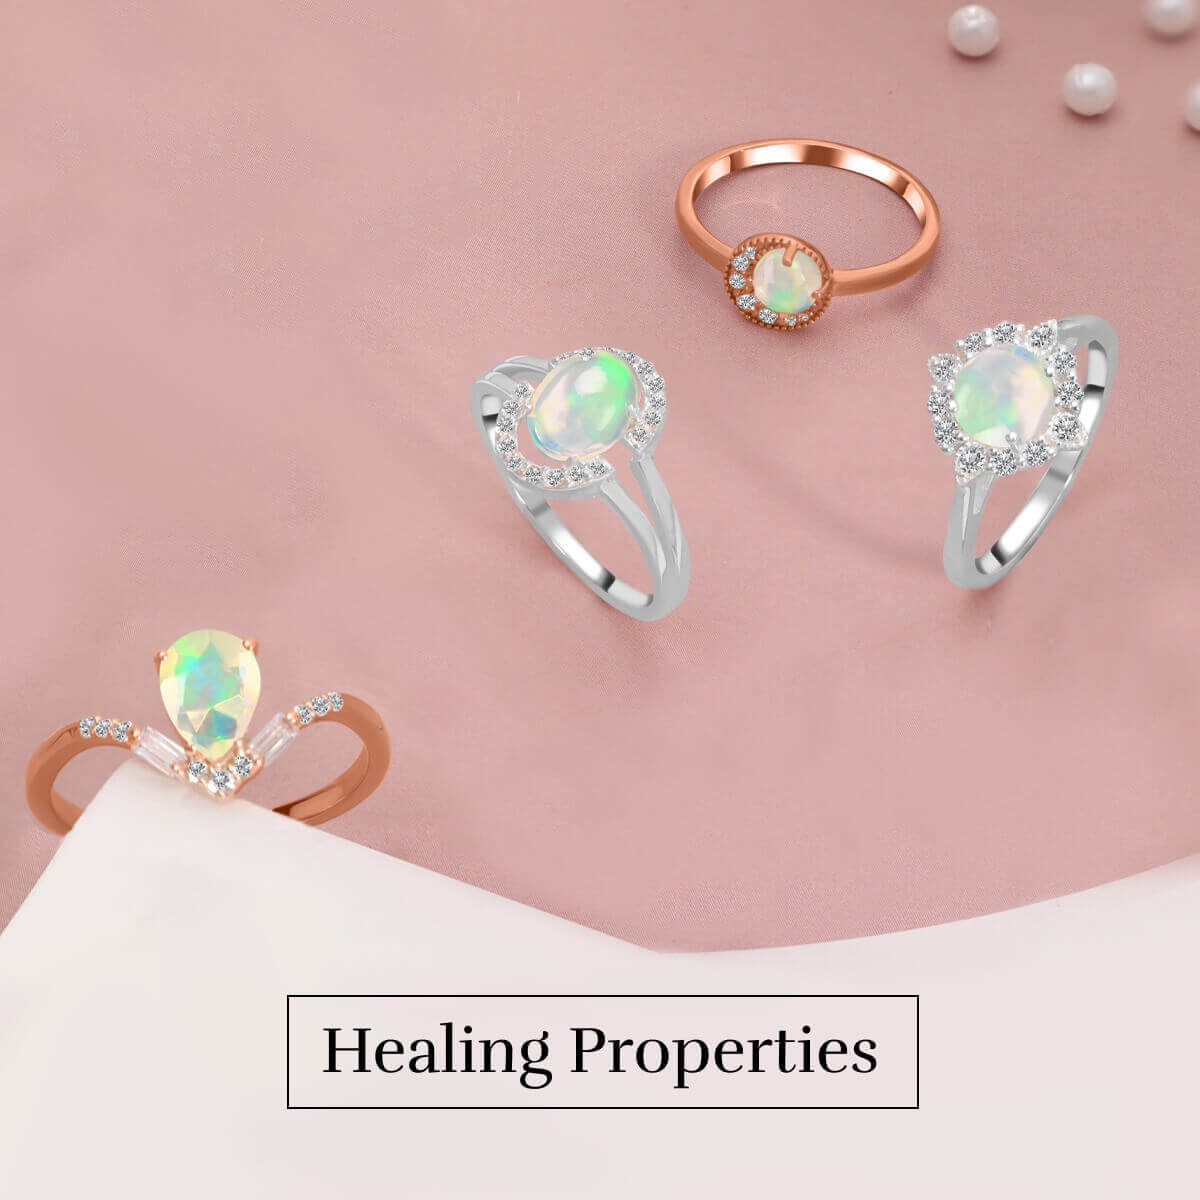 How to Wear a Opal Gemstone